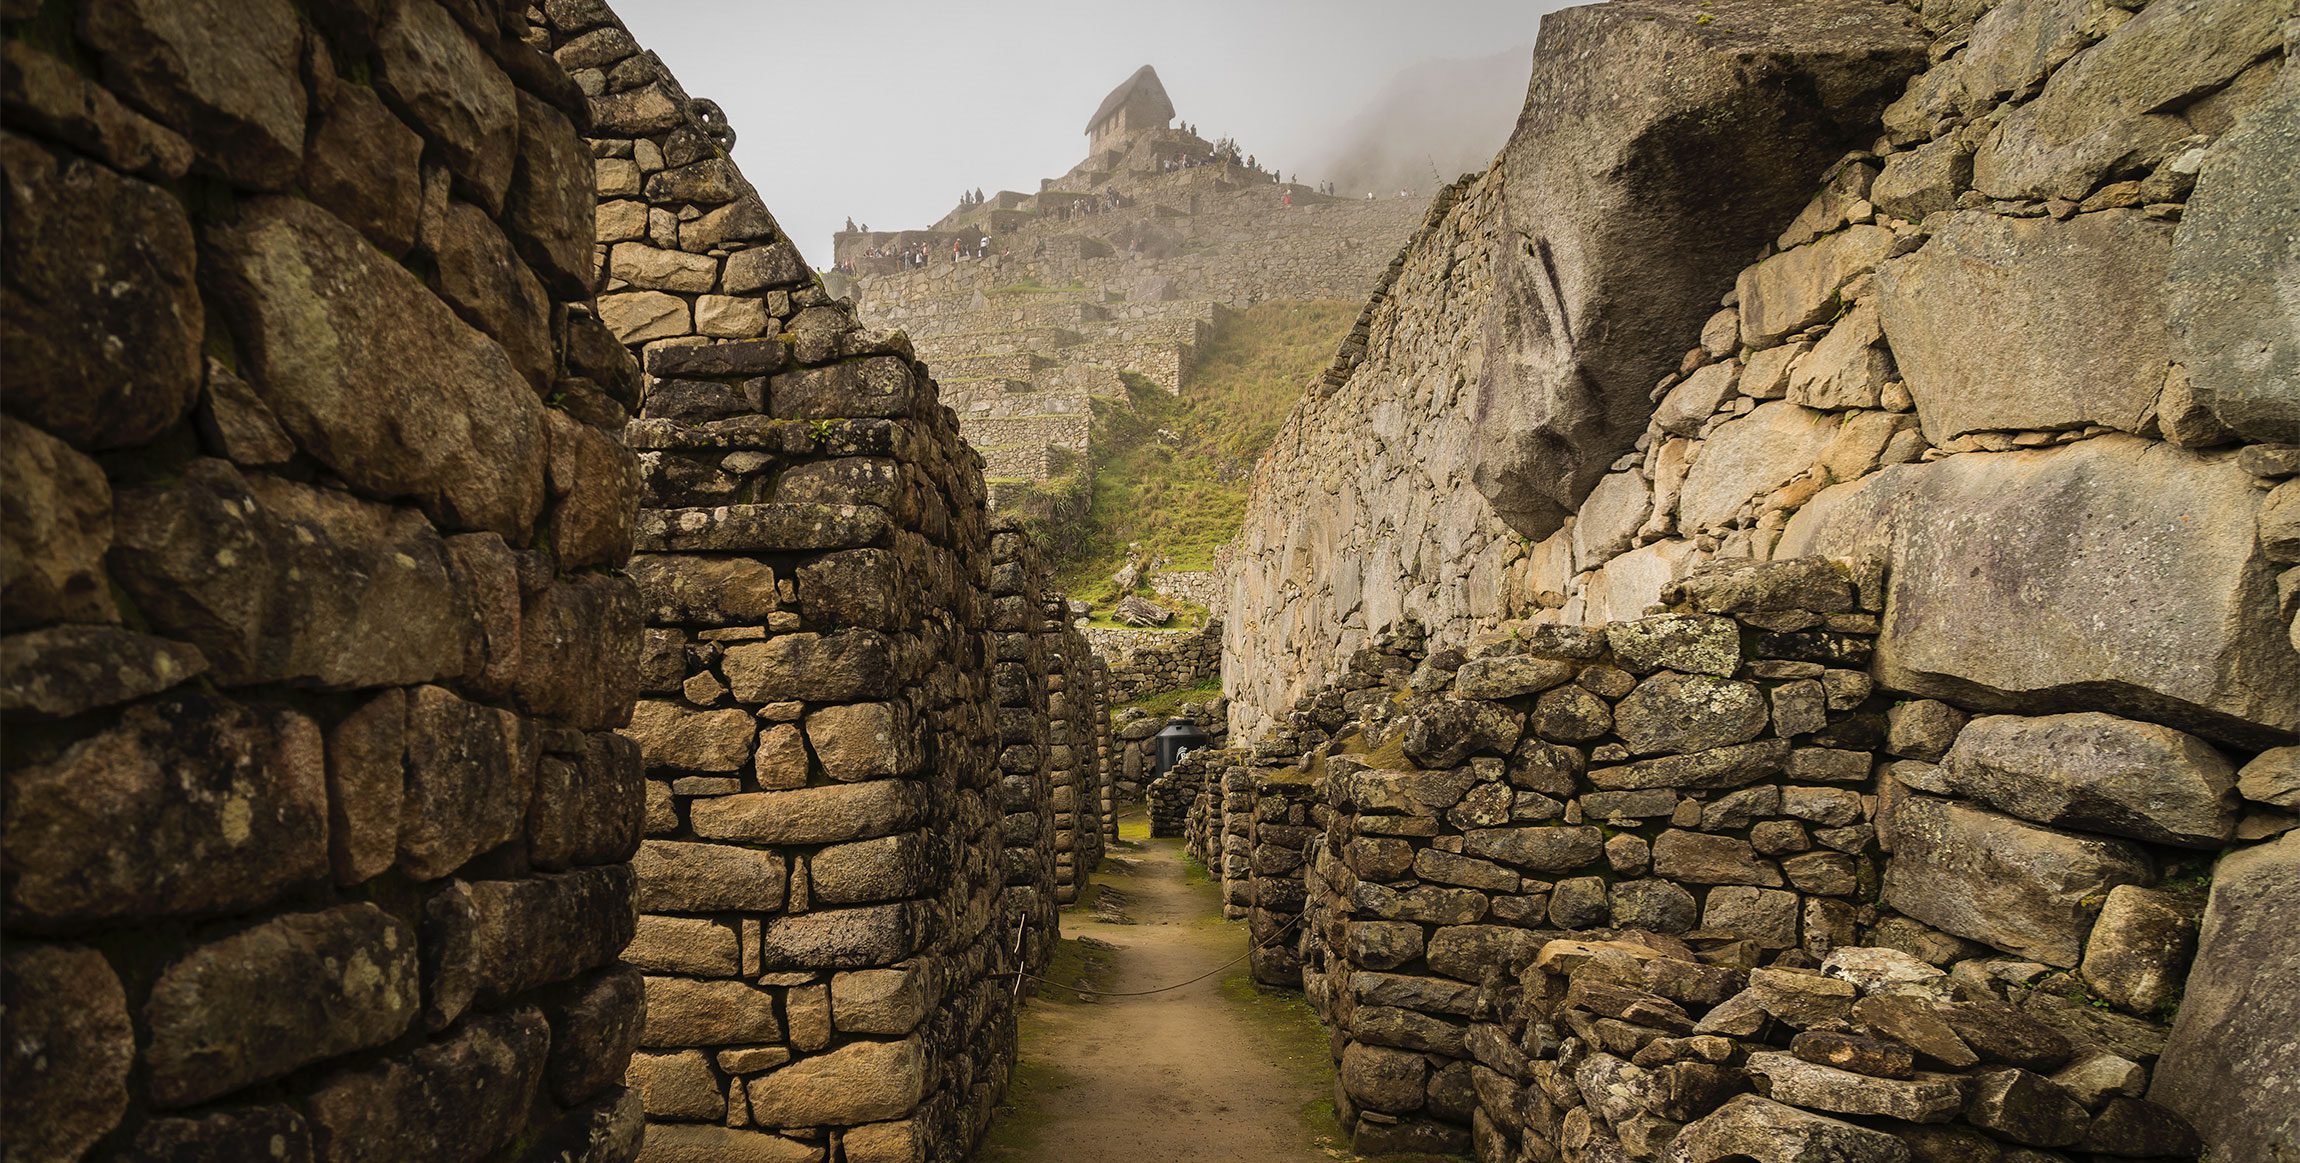 Corridors and paths of Machu Picchu